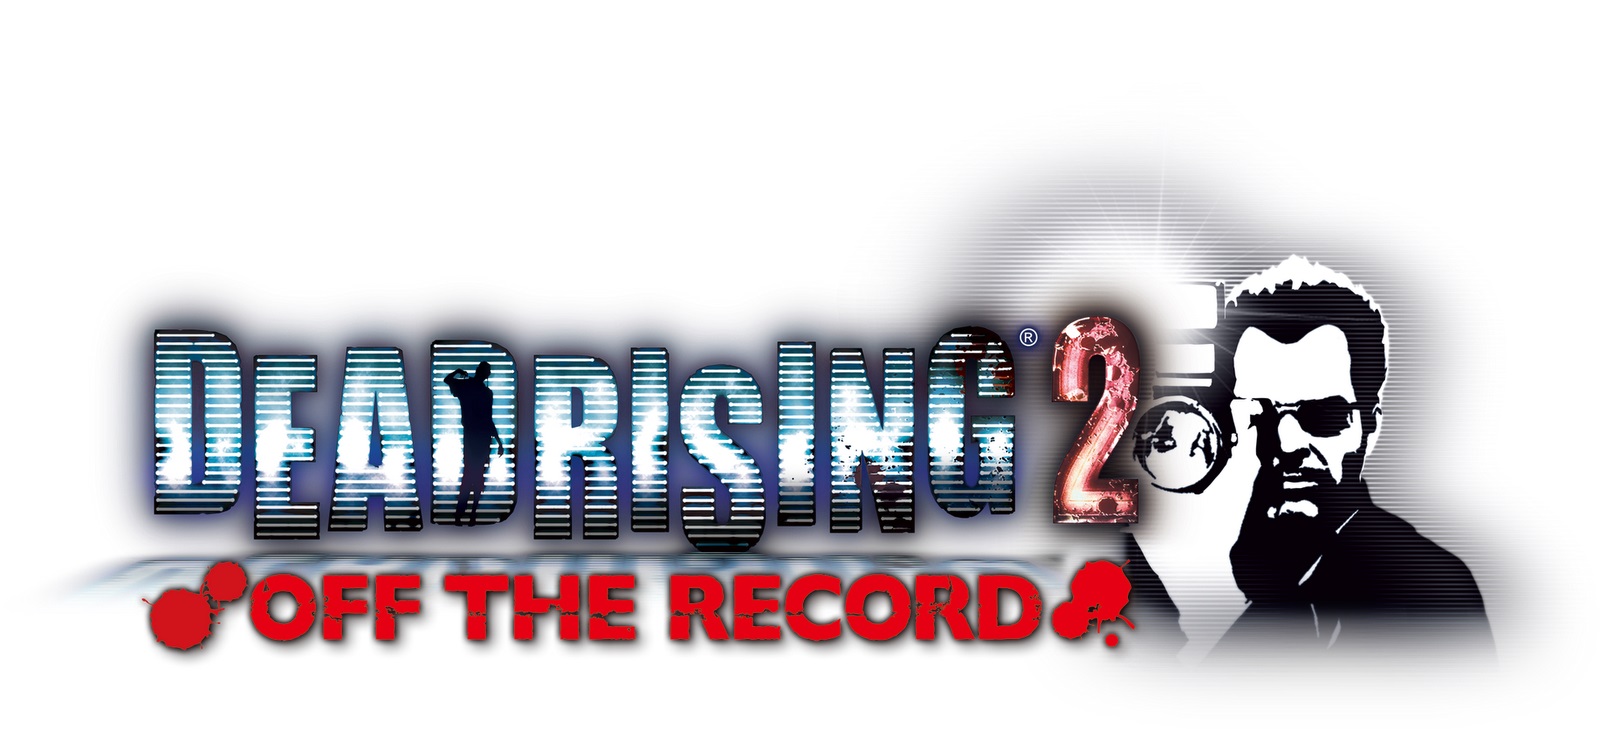 kisspng-dead-rising-2-off-the-record-dead-island-xbox-360-dead-rising-5ab84fe5ddf047.8213664015220285179091.jpg